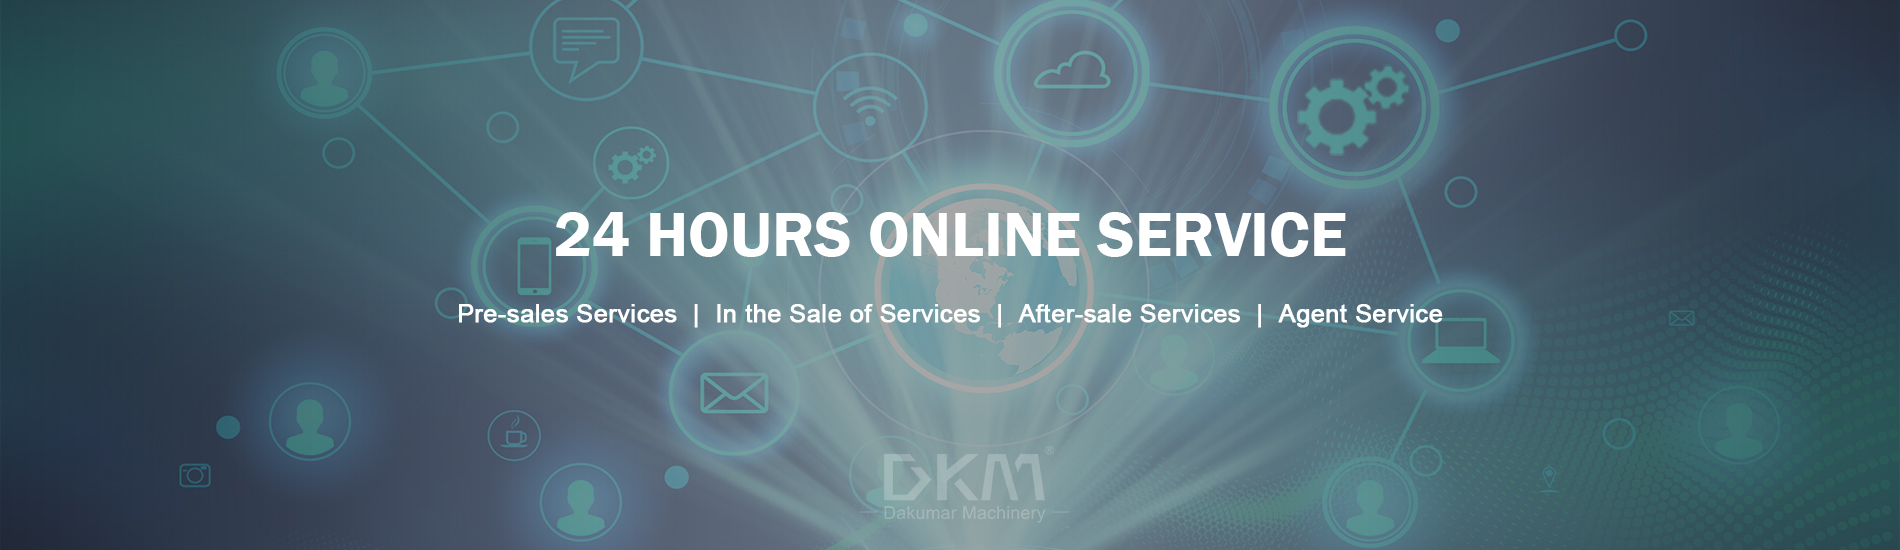 24 hours online service